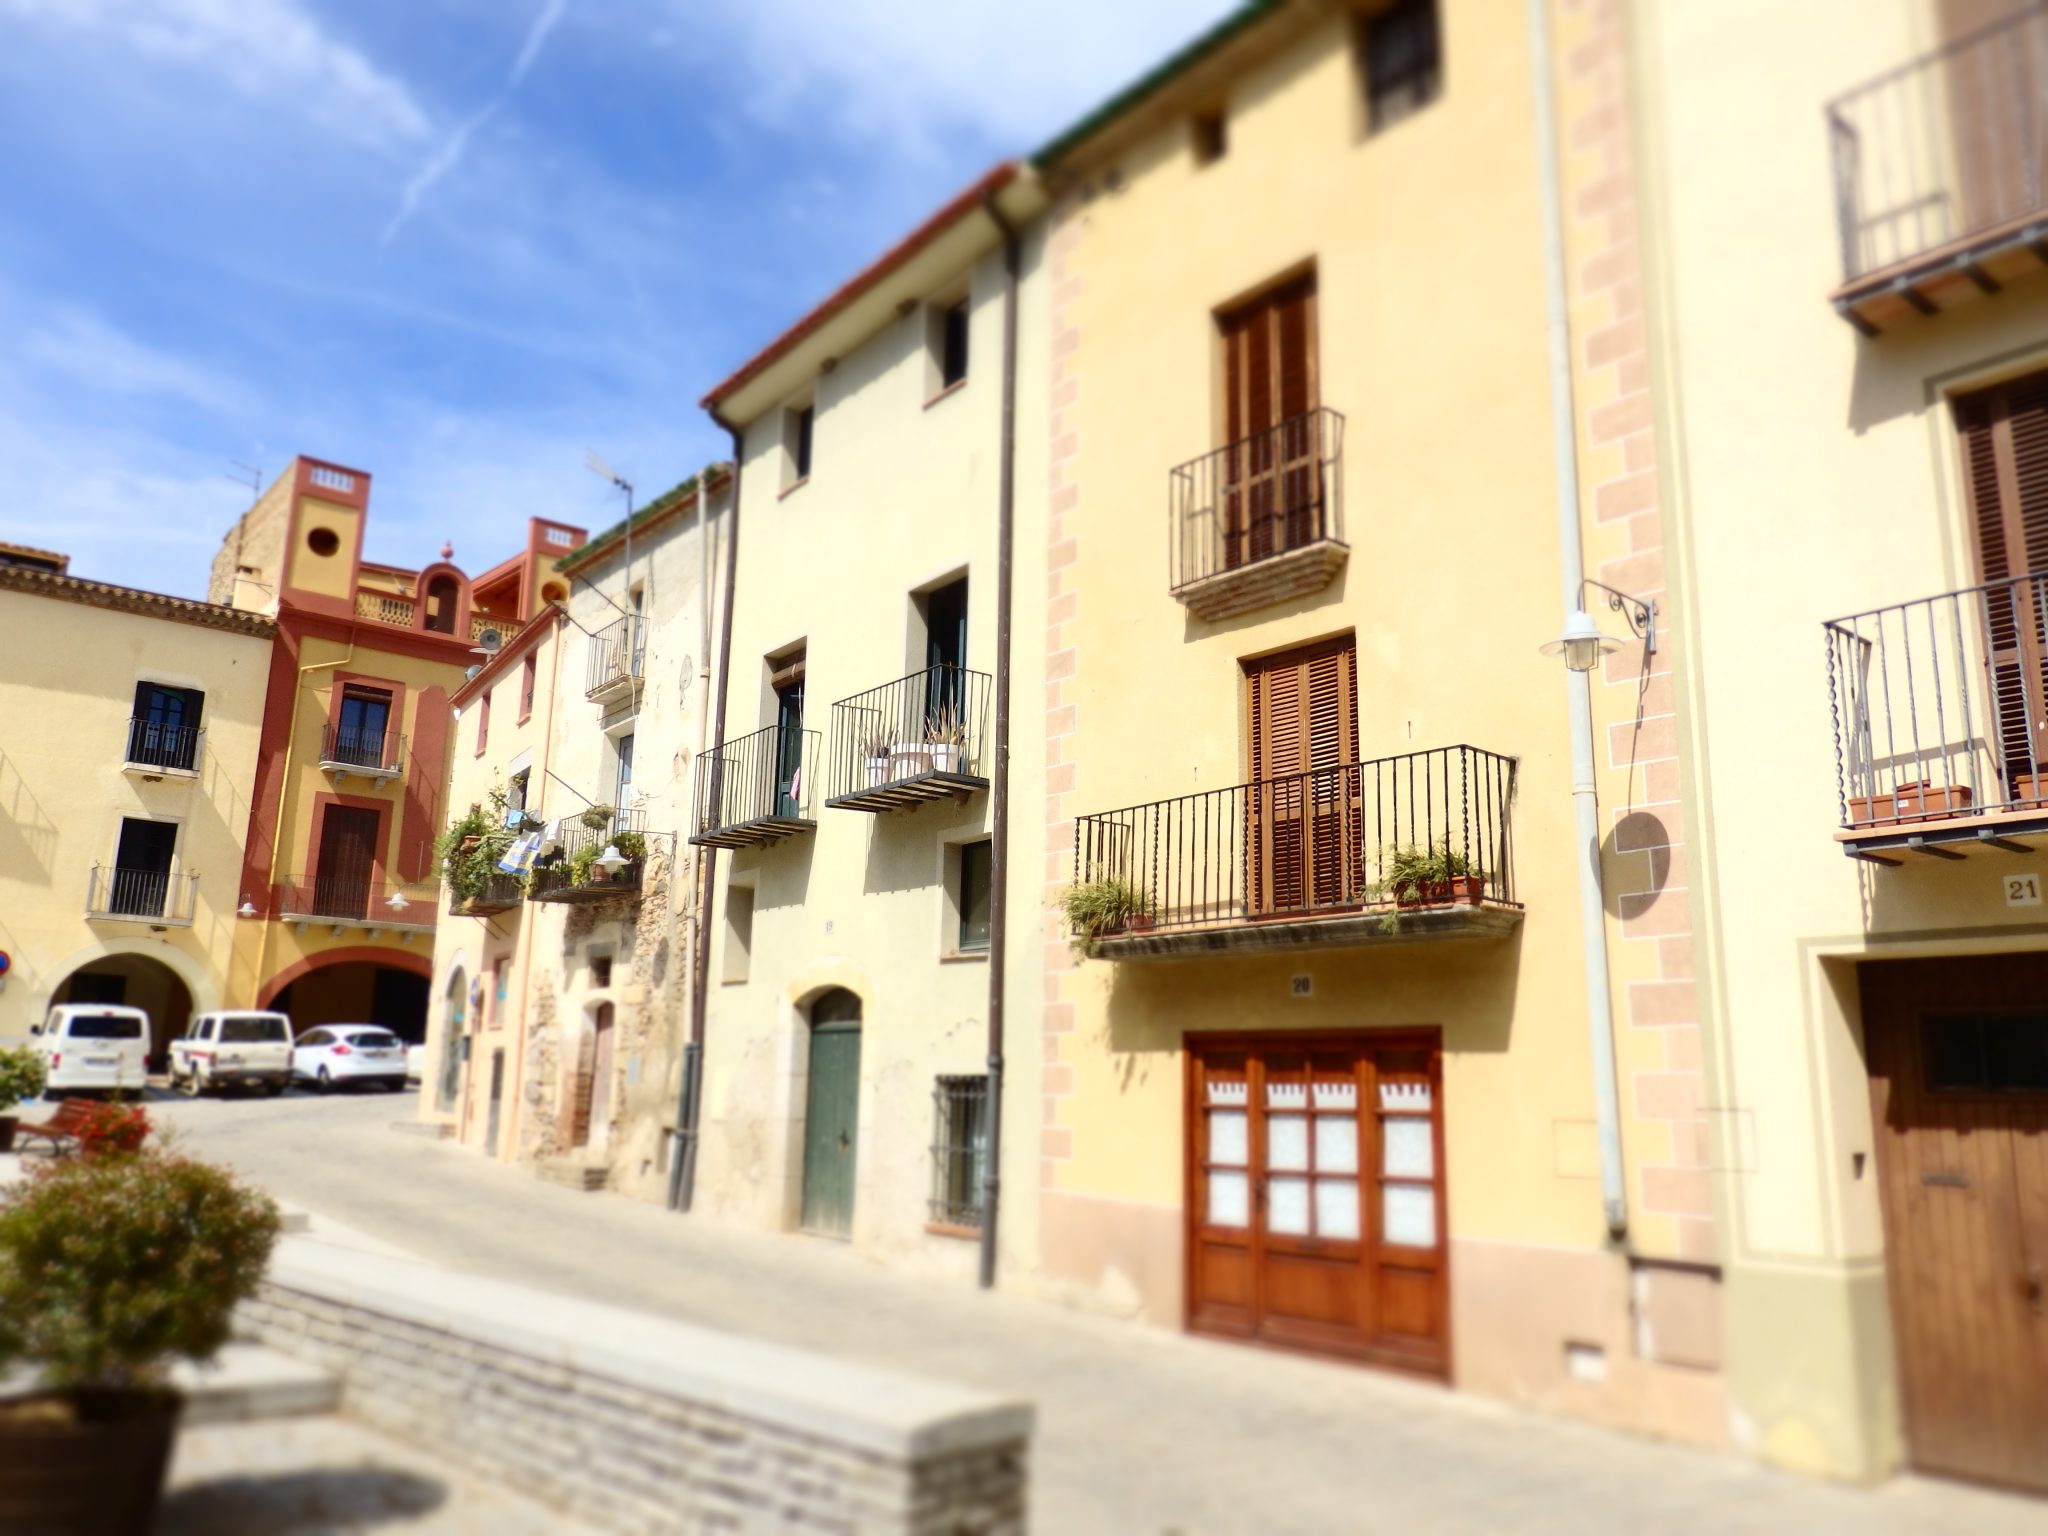 a pretty row of houses in Peratallada in the Baix Emporda, Spain